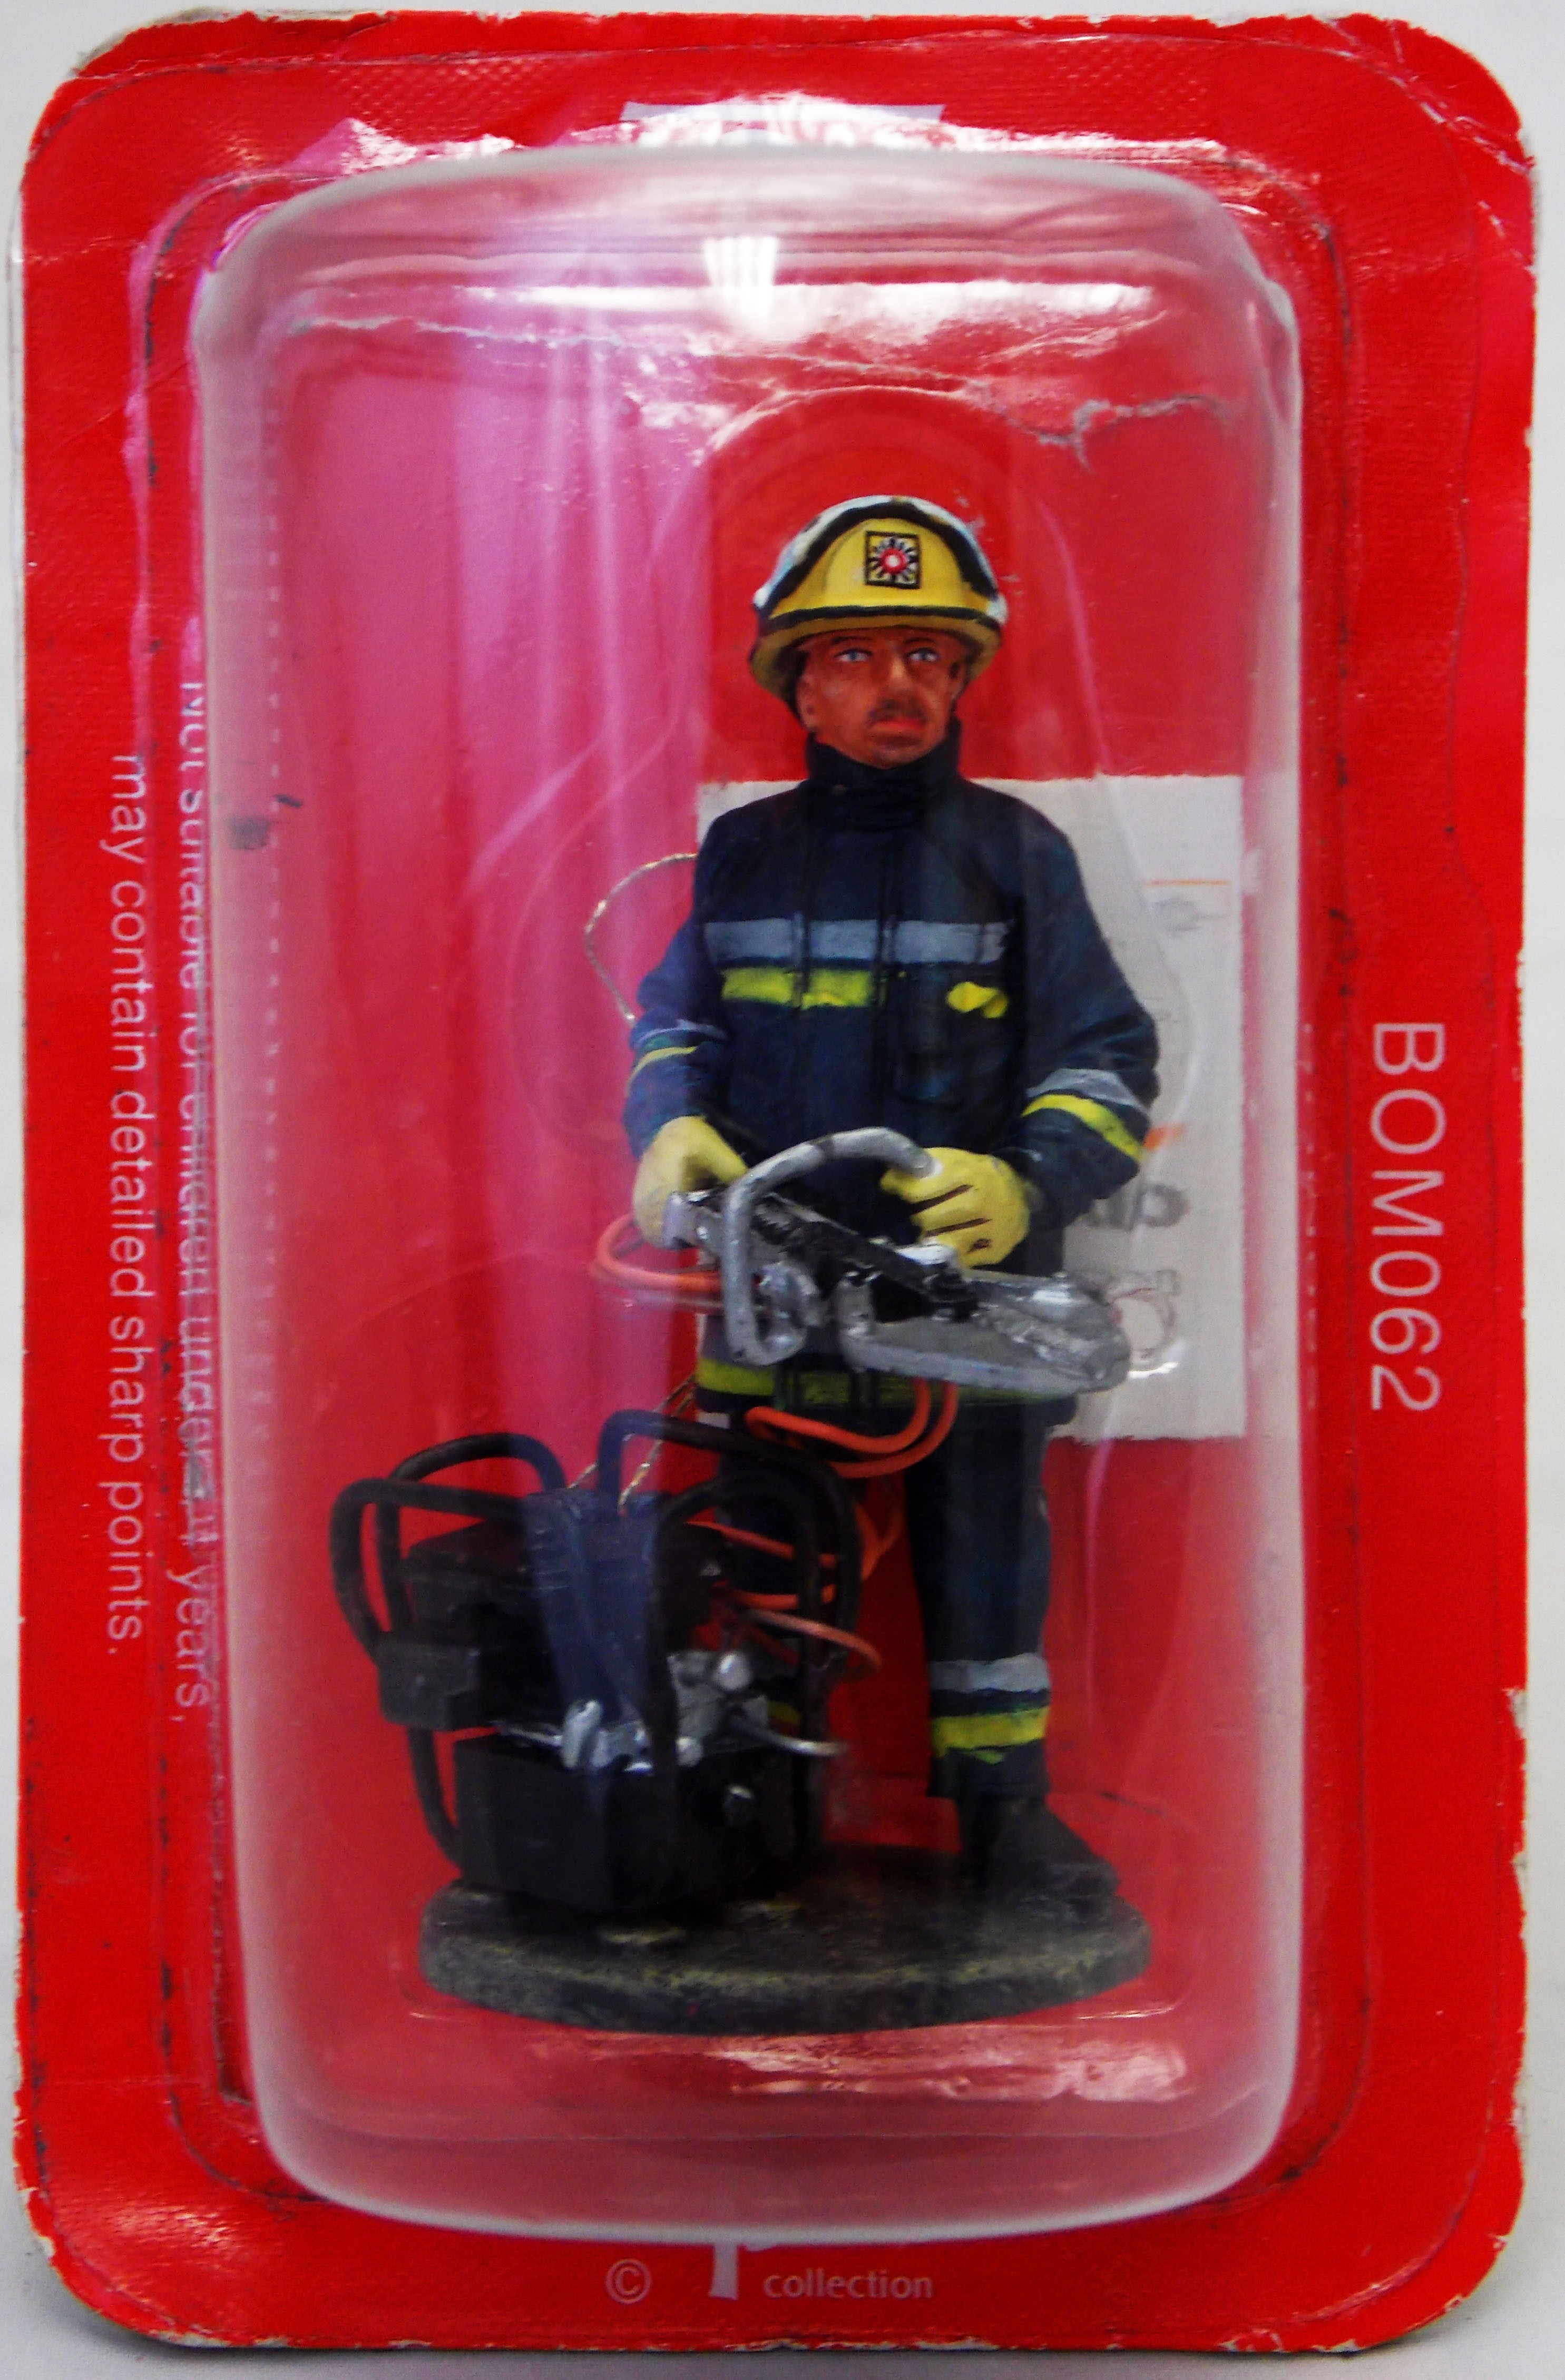 Firefighter Figurine Fireman France 2002 Metal Del Prado 1/32 2.75" 